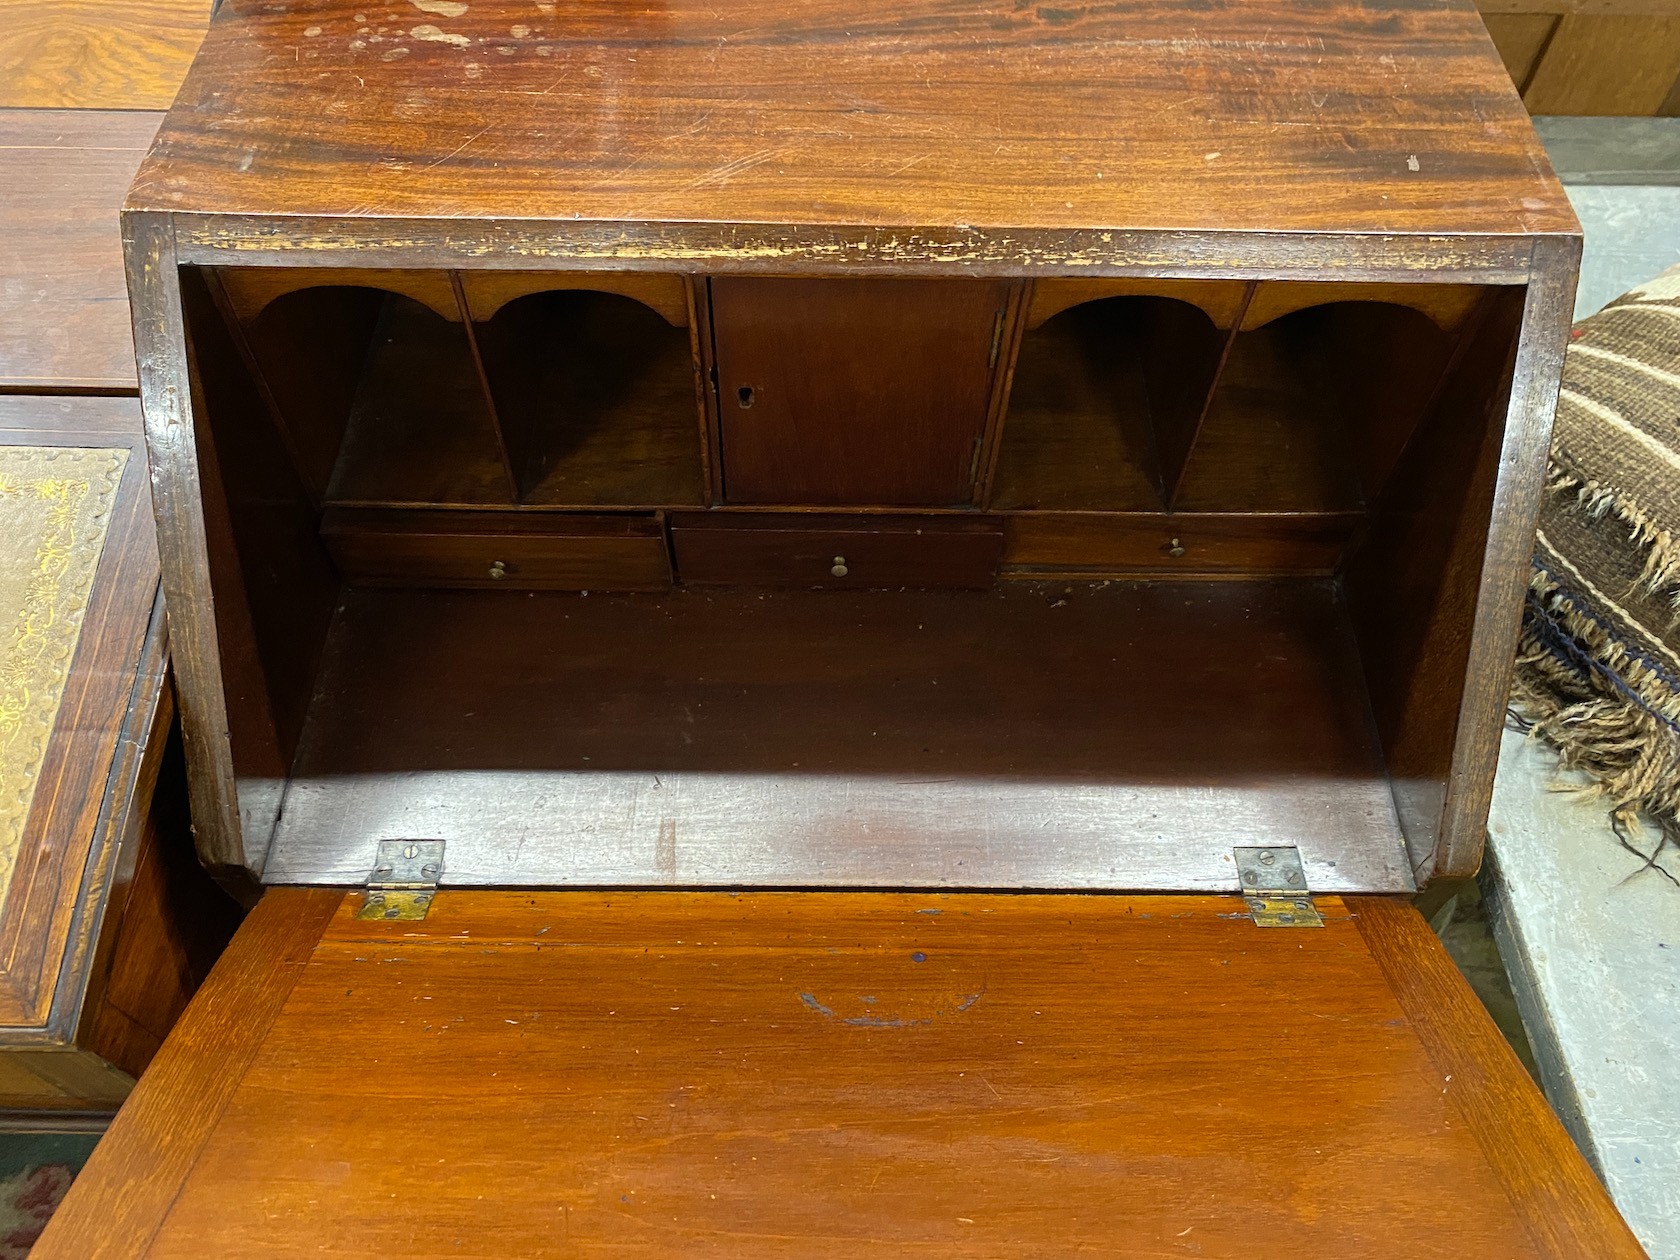 A small George III style mahogany bureau, width 61cm, depth 46cm, height 96cm